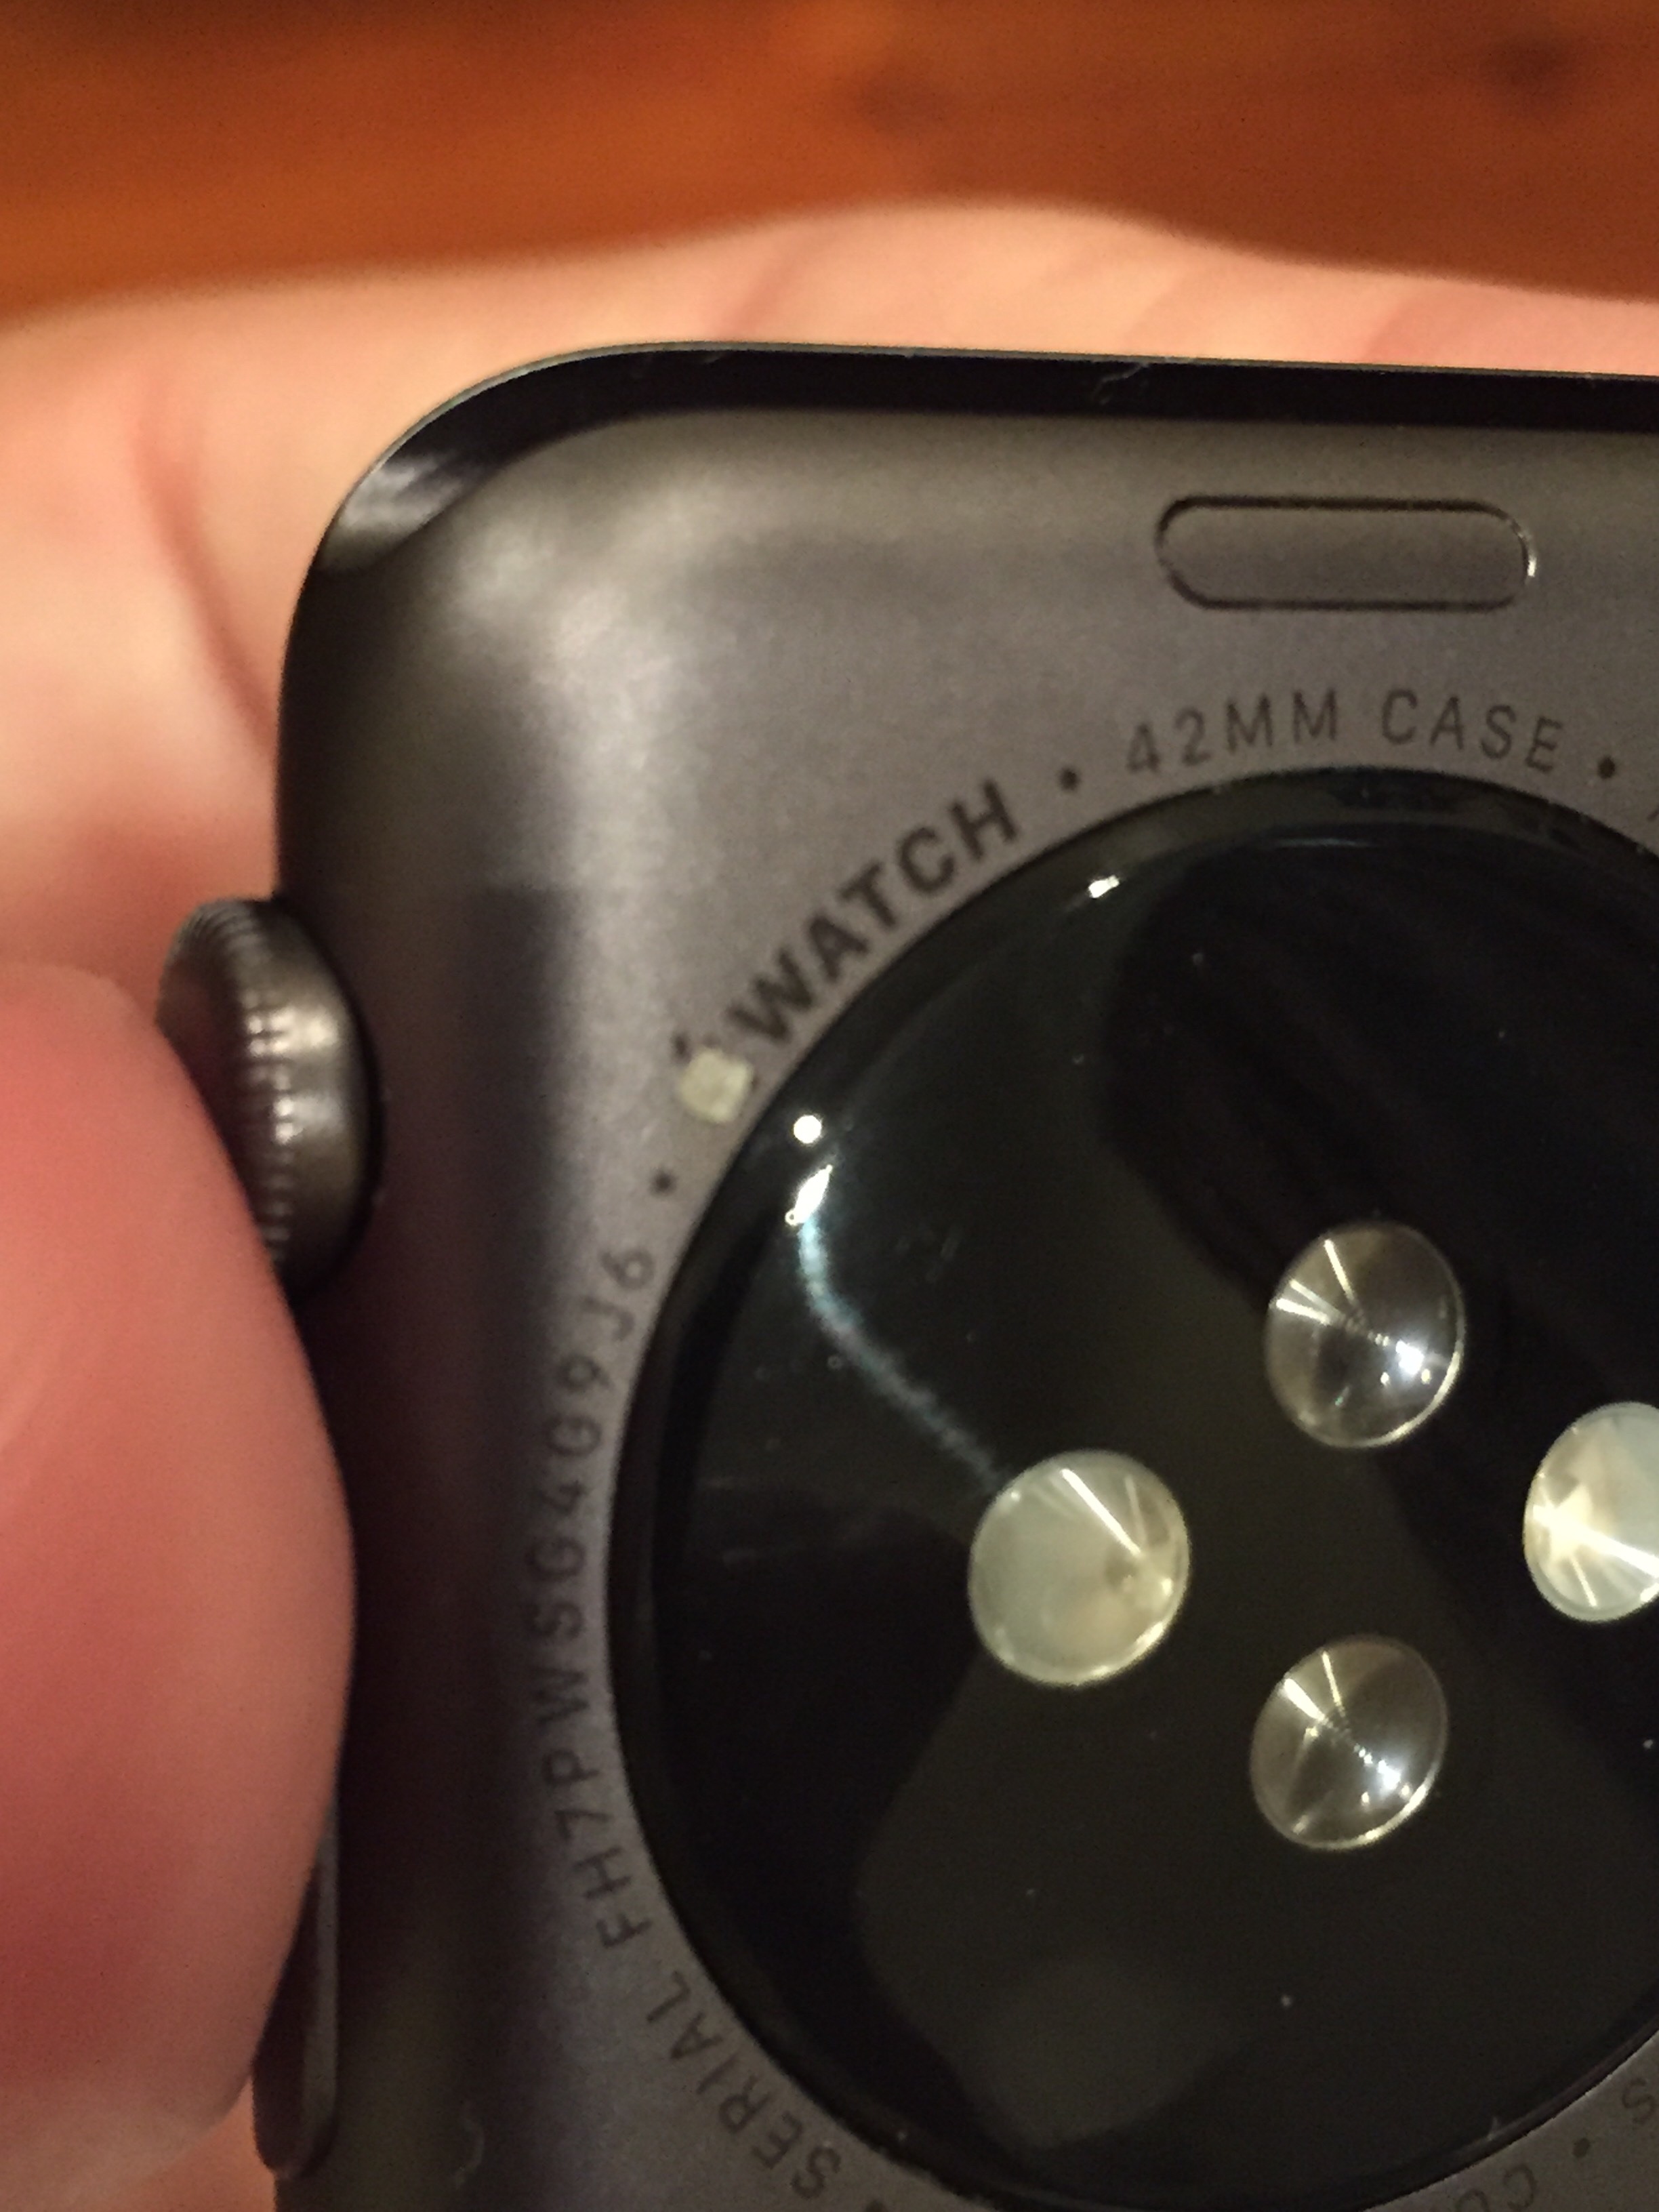 Apple Watch logo peeled off